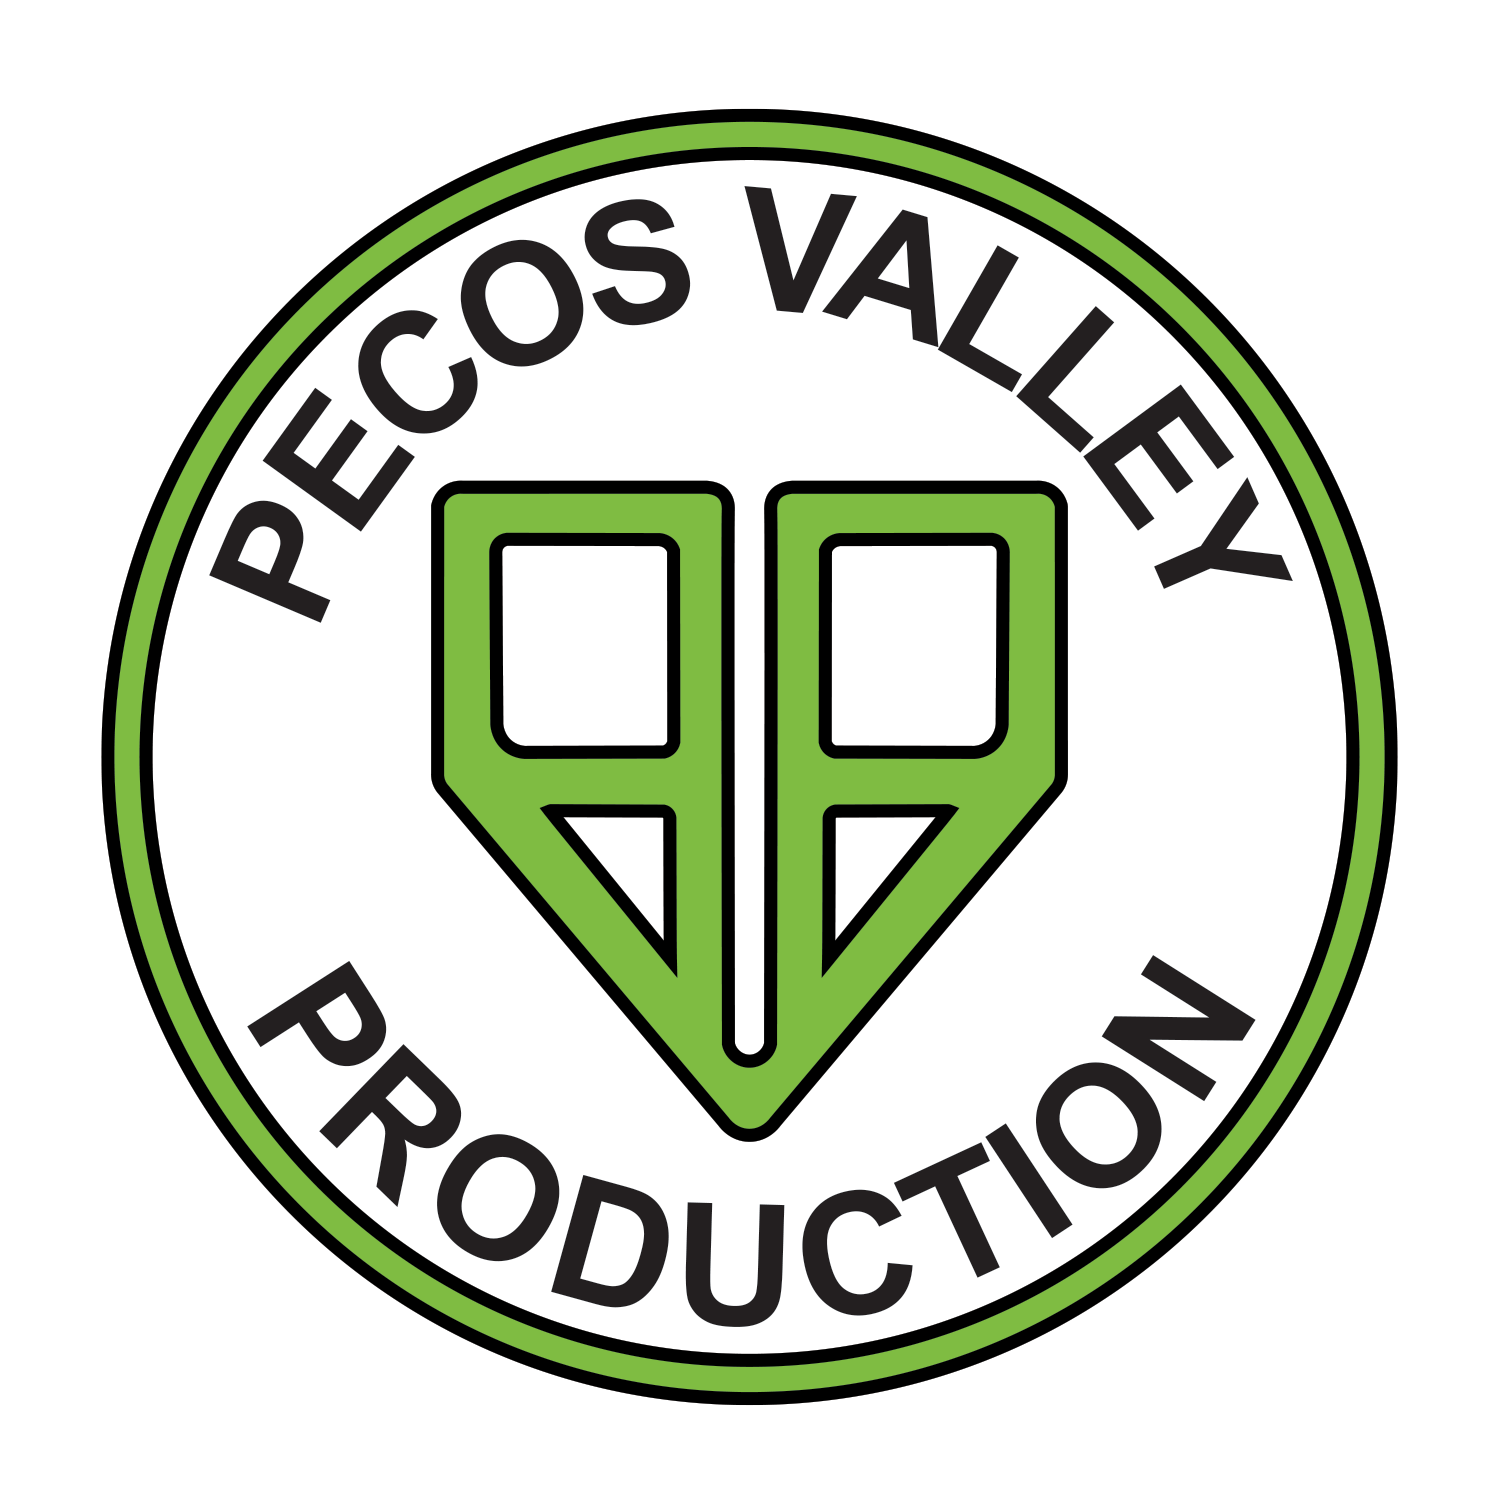 Pecos Valley Production - Ruidoso logo